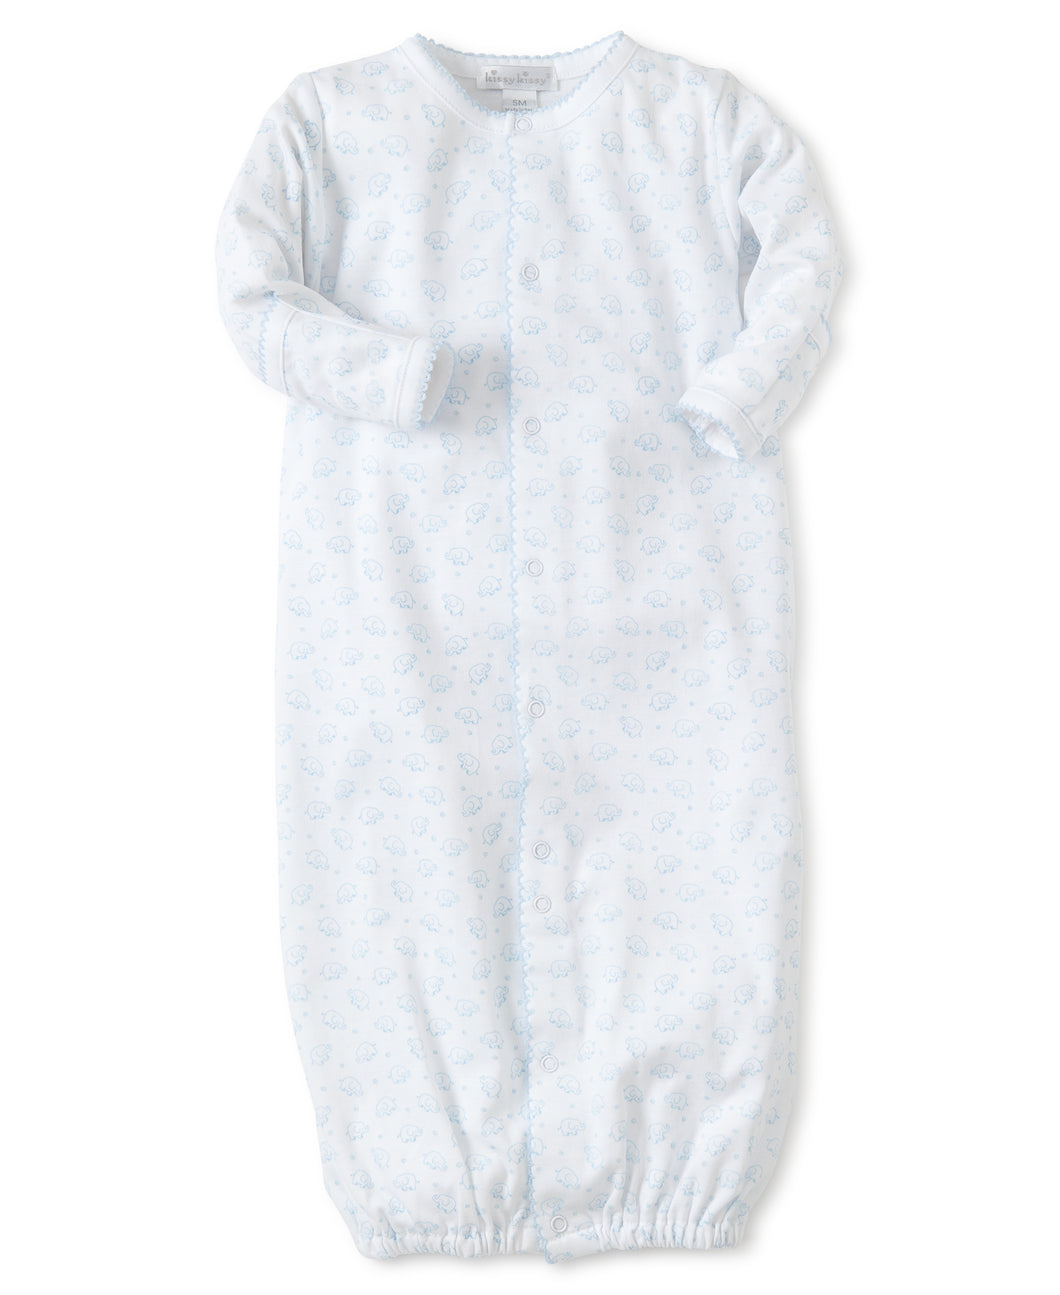 Ele-fun Converter gown print-infant